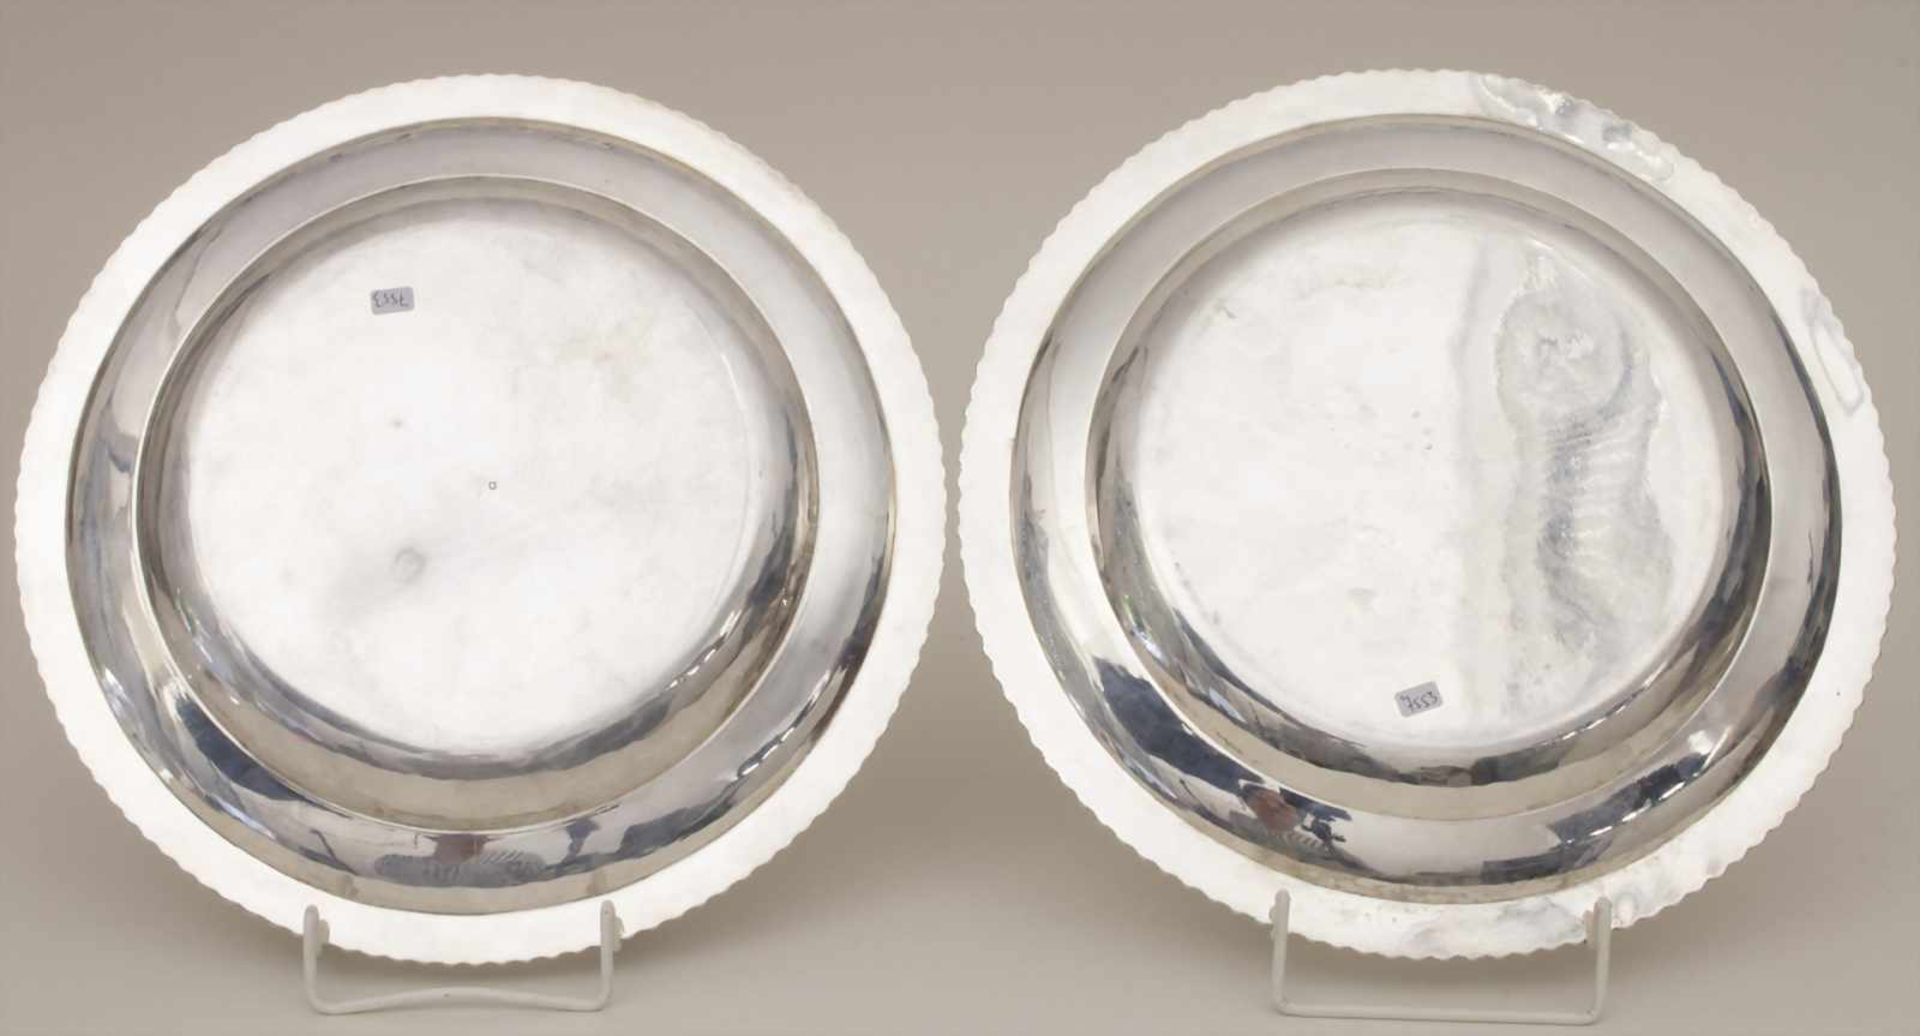 2 runde Platten / 2 silver plates, Paris, nach 1839Material: Silber 950,Punzierung: Meistermarke ??, - Image 2 of 2